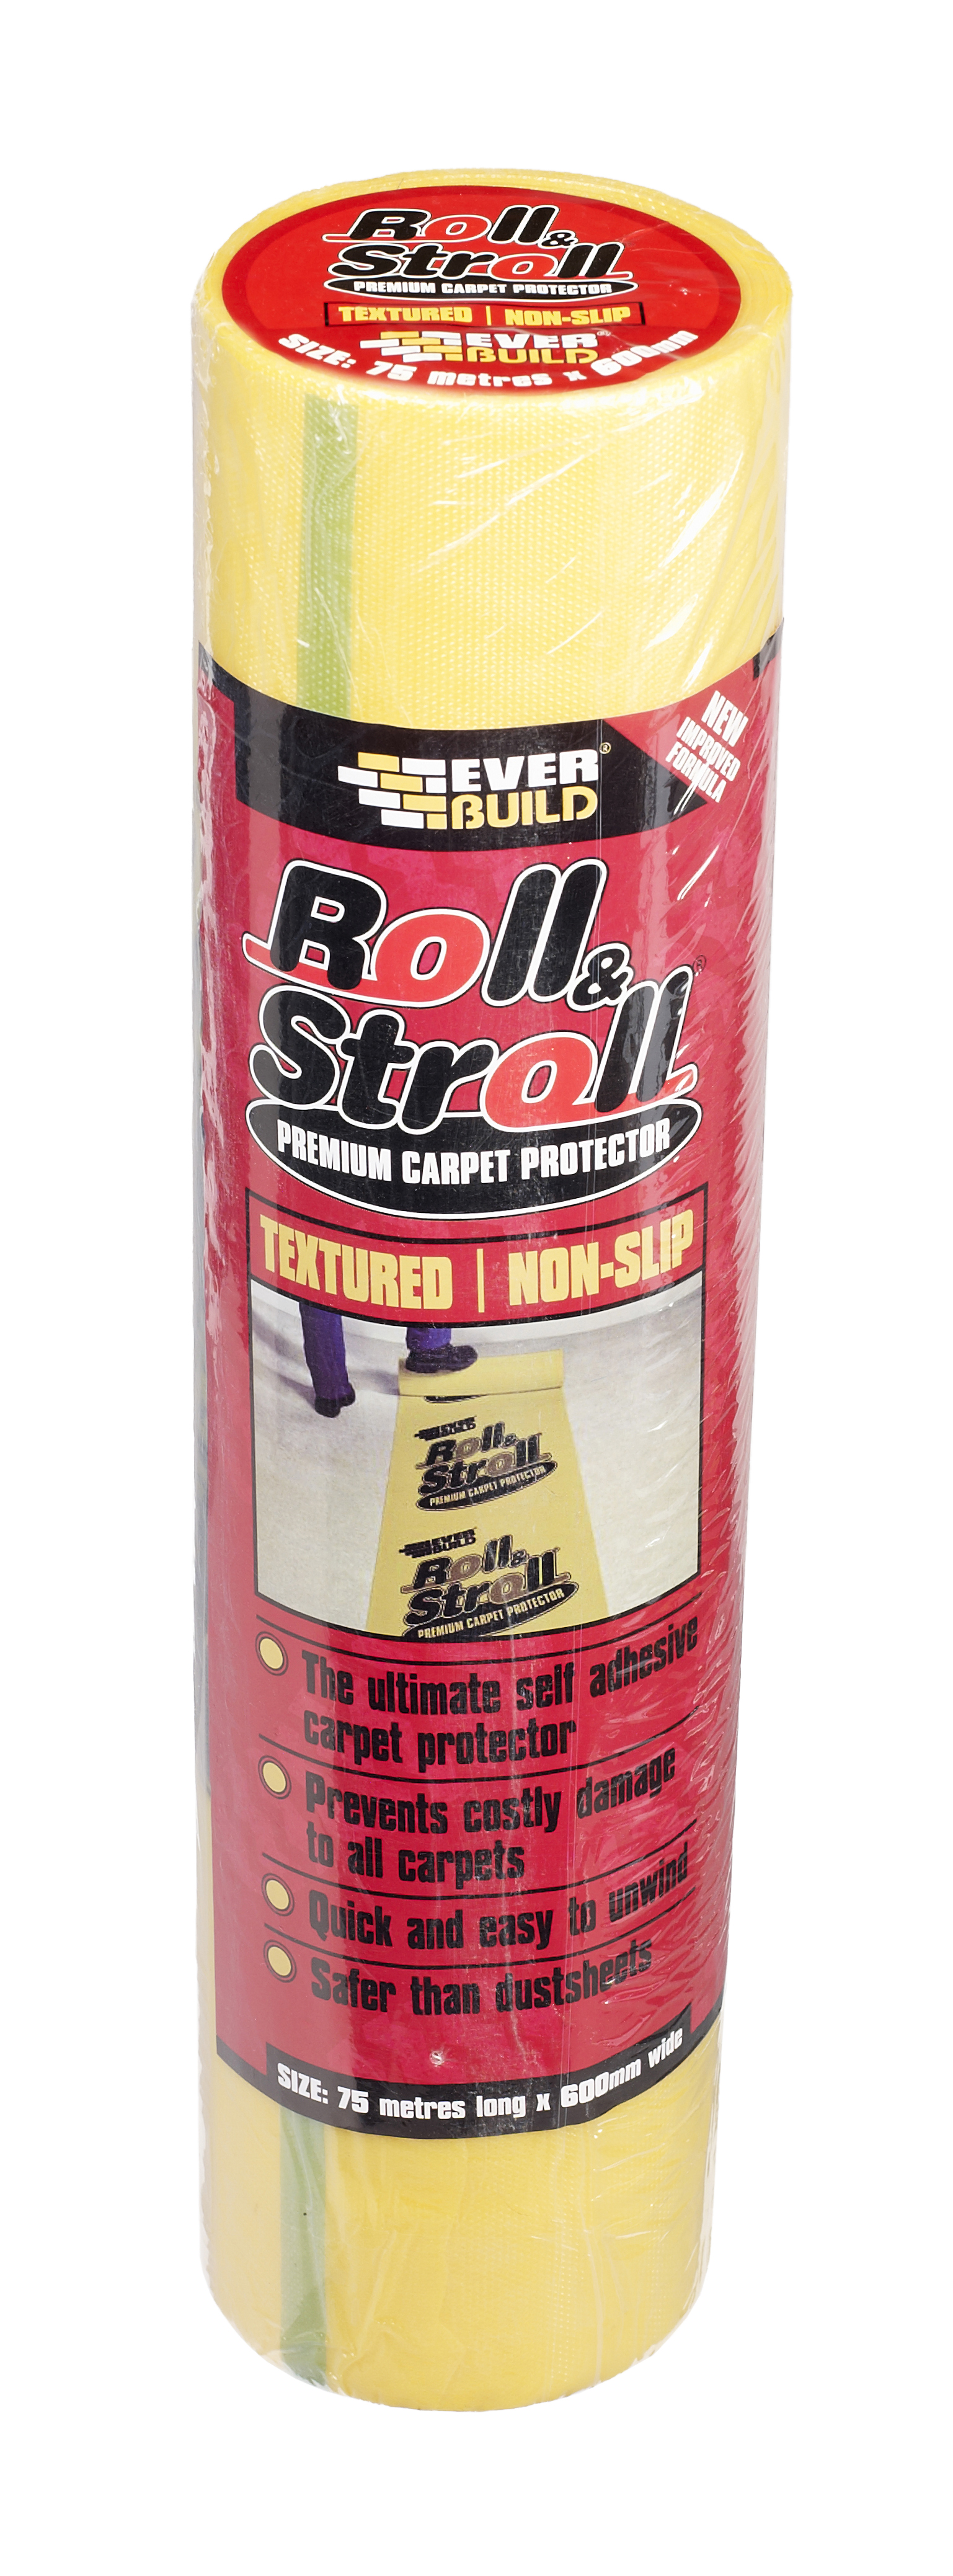 600mm x 75m Roll & Stroll Textured Non-Slip Carpet Protector